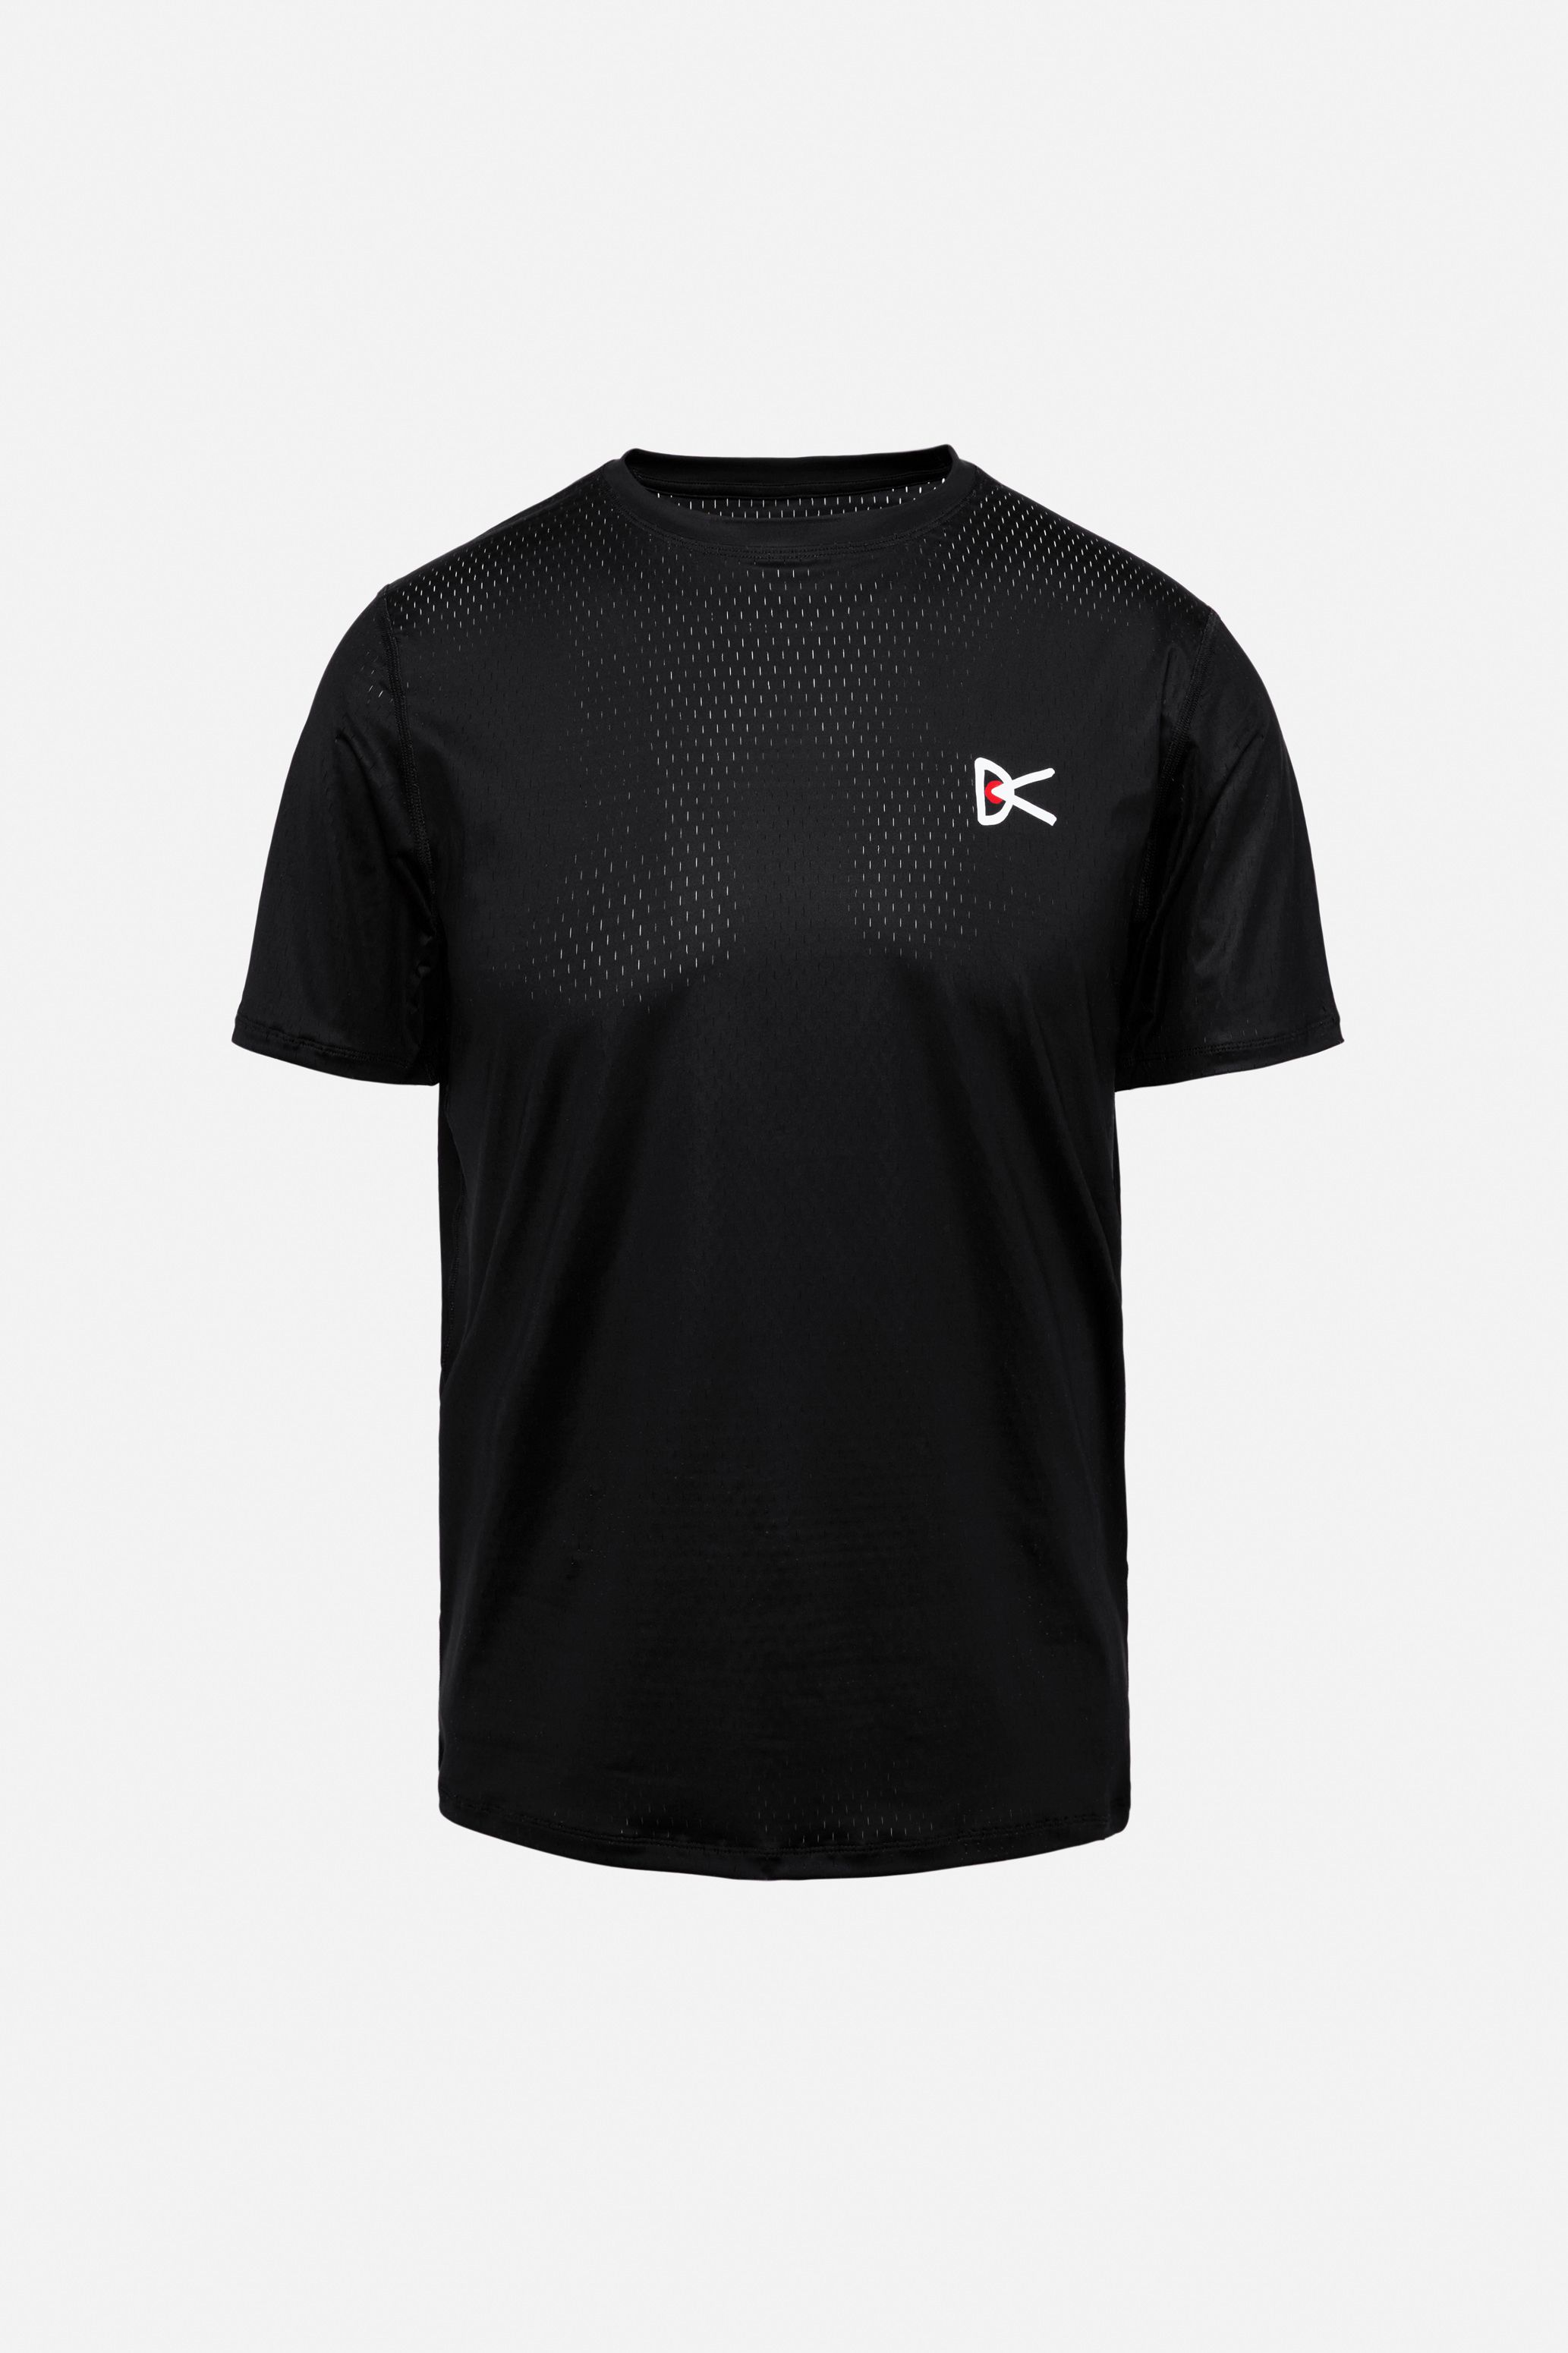 Air–Wear Short Sleeve T-Shirt, Black